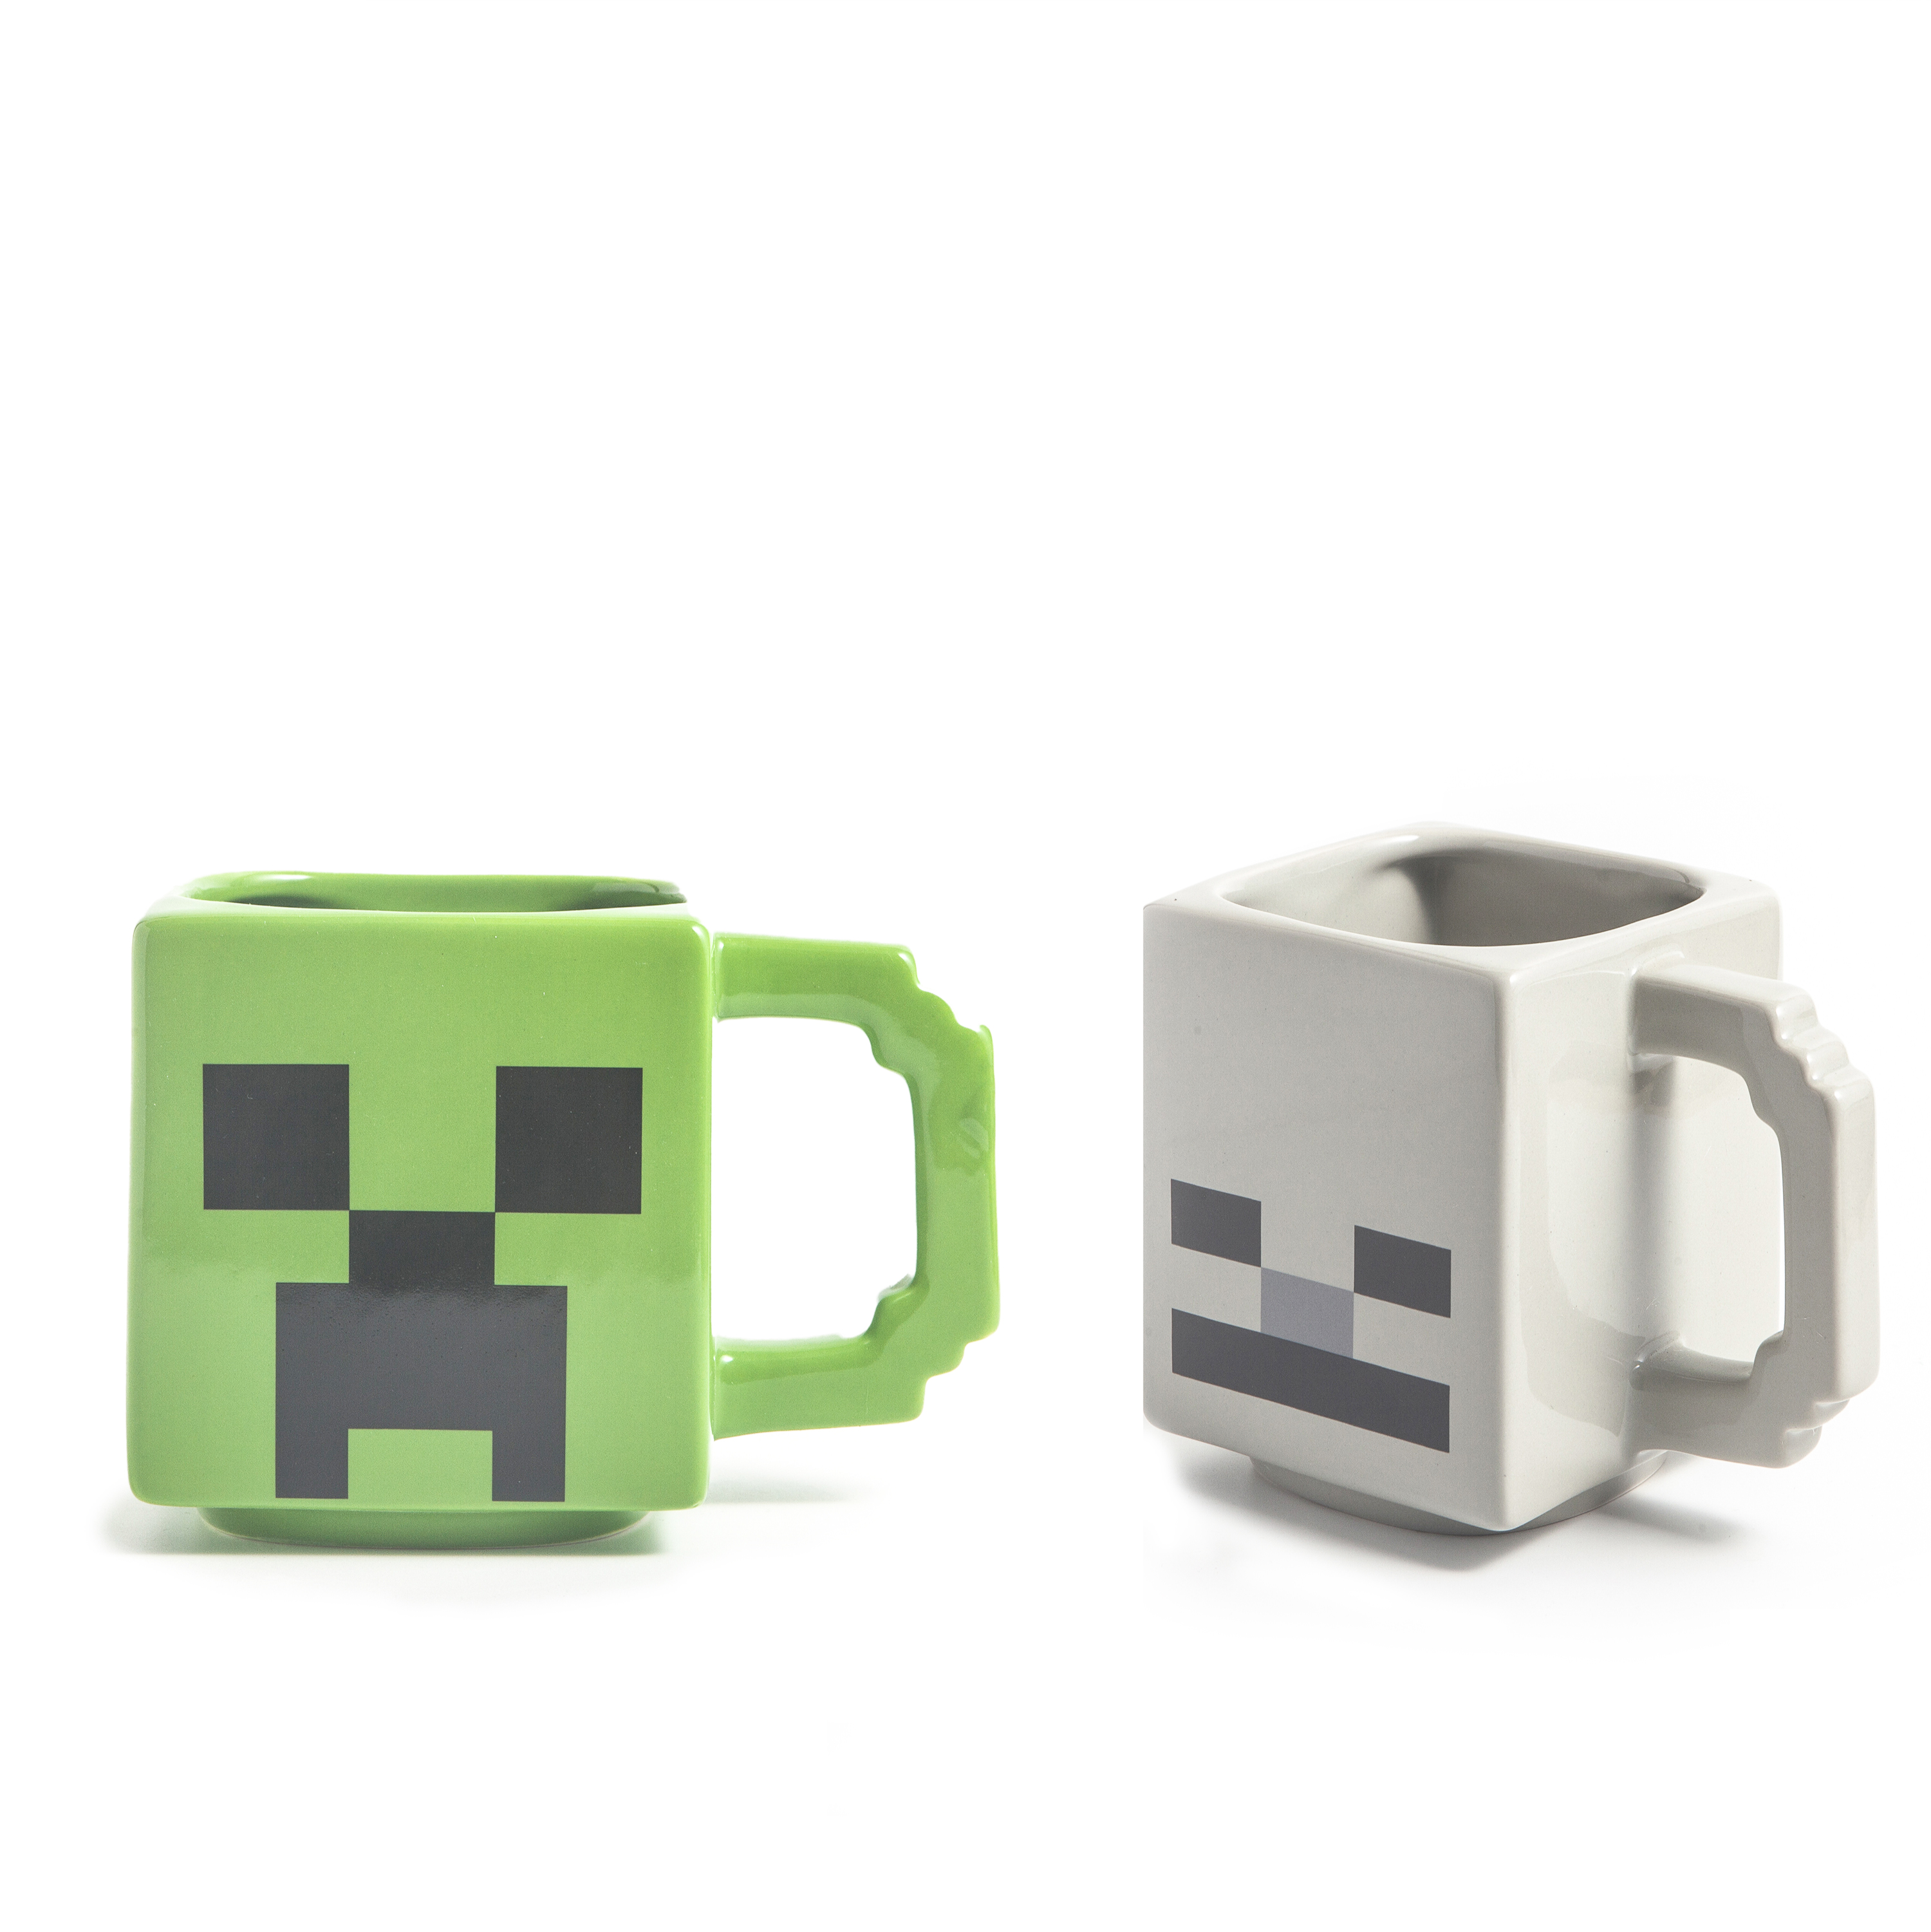 Minecraft Ceramic Coffee Mug, TNT, Skeletons and Creeper, 3-piece set slideshow image 6